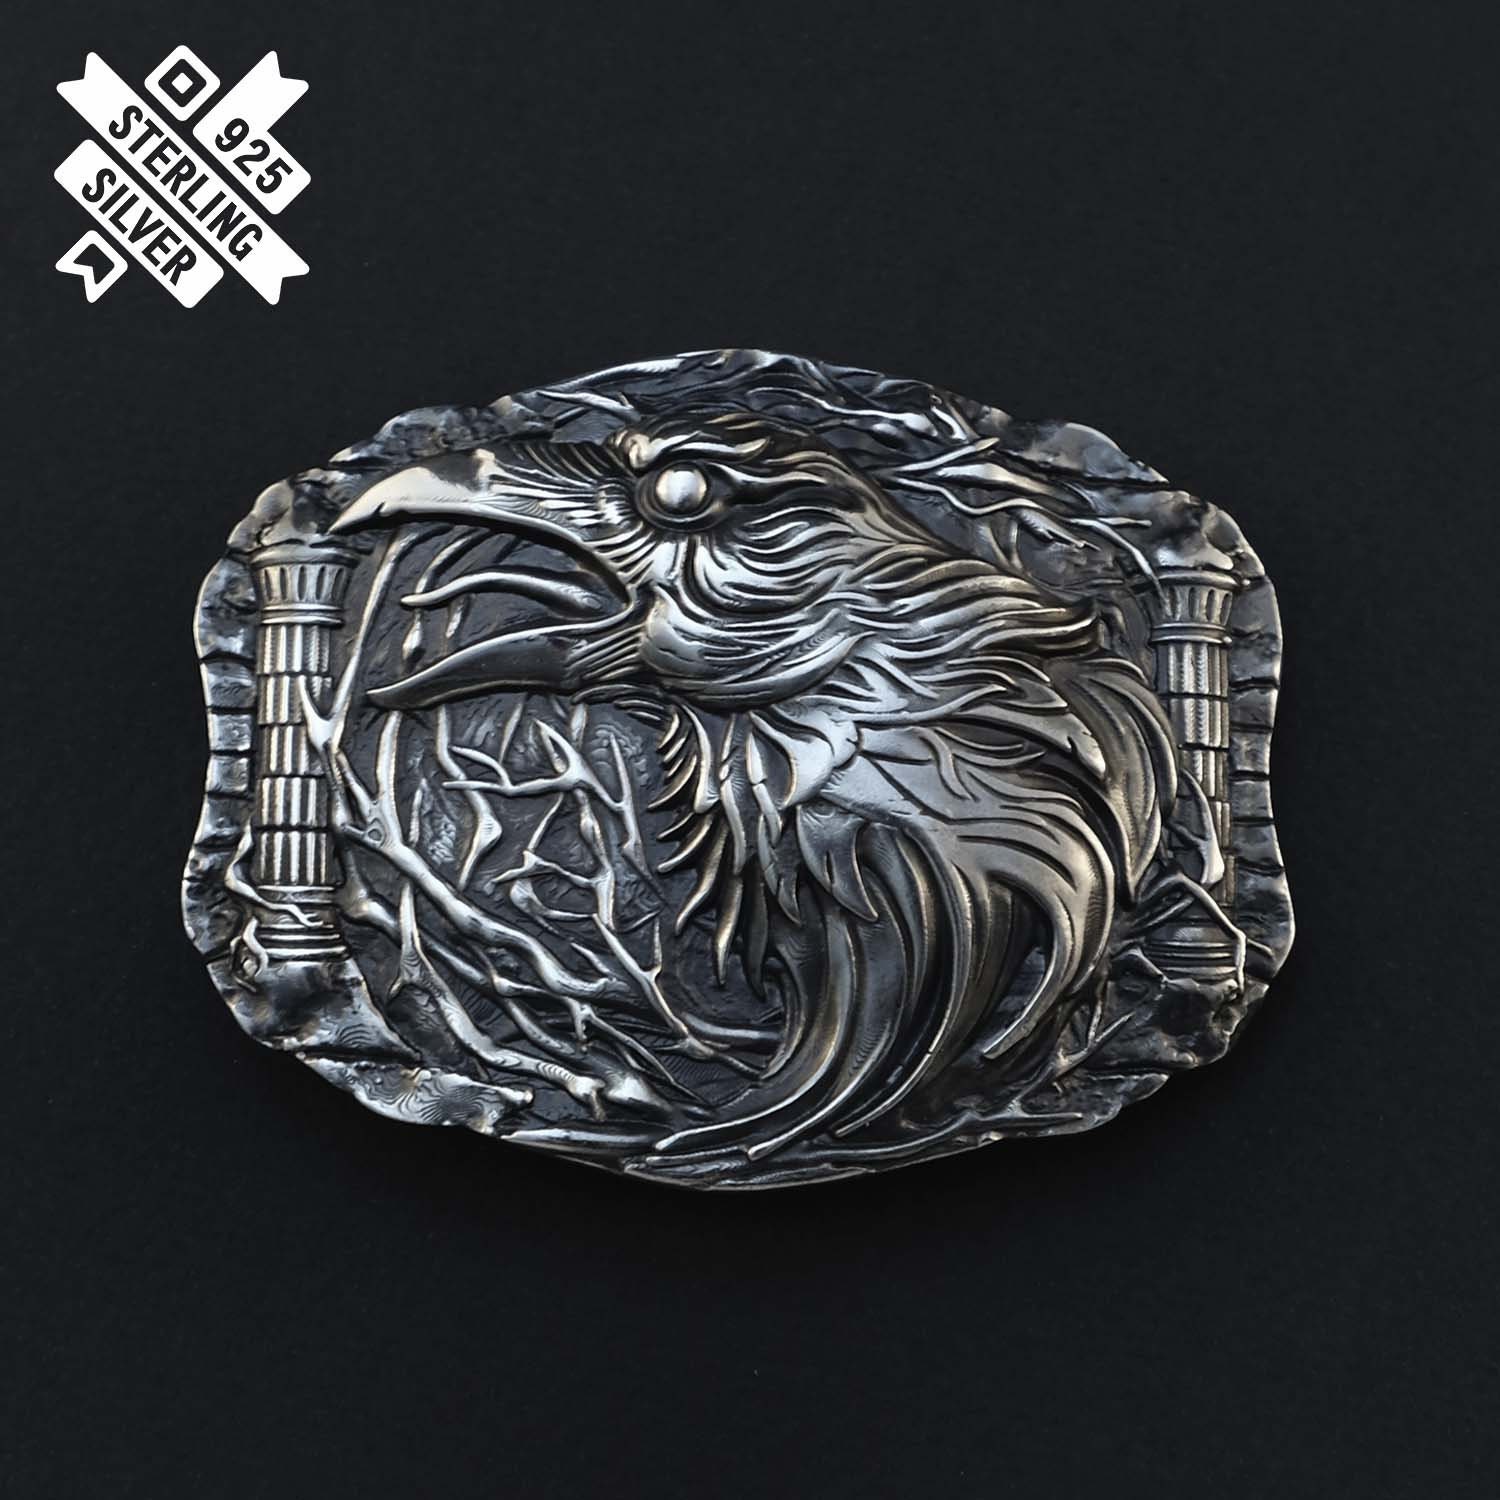 Raven Belt Buckle, Old Norse Scandinavian Odin's Huginn and Muninn Ravens  Solid 925 Sterling Silver Belt Buckle -  Norway